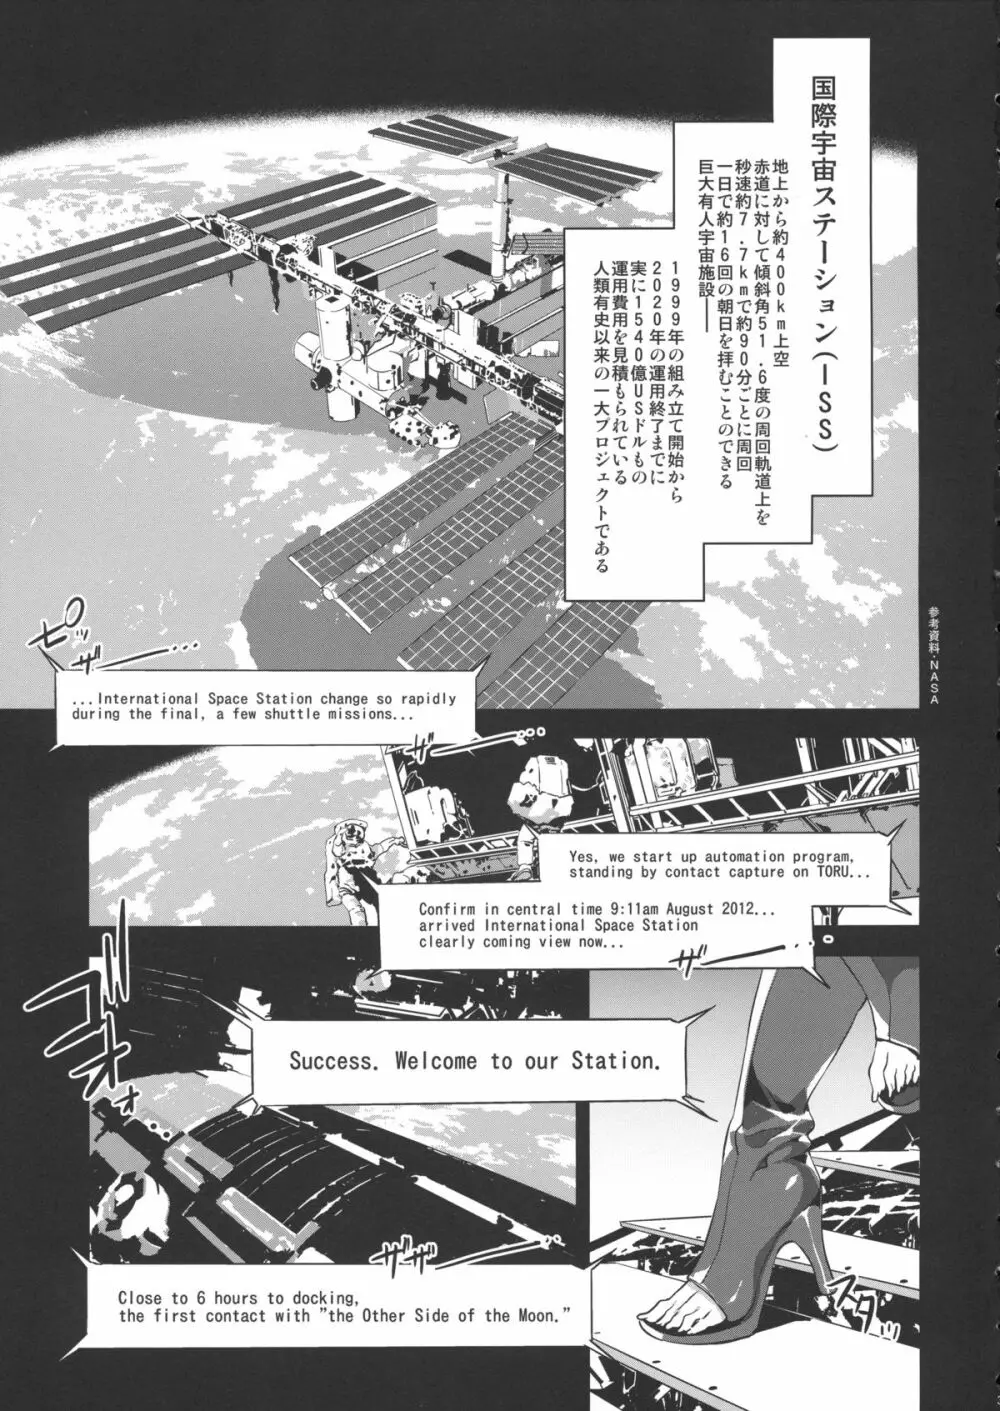 東方幻想崩壊了 - page4